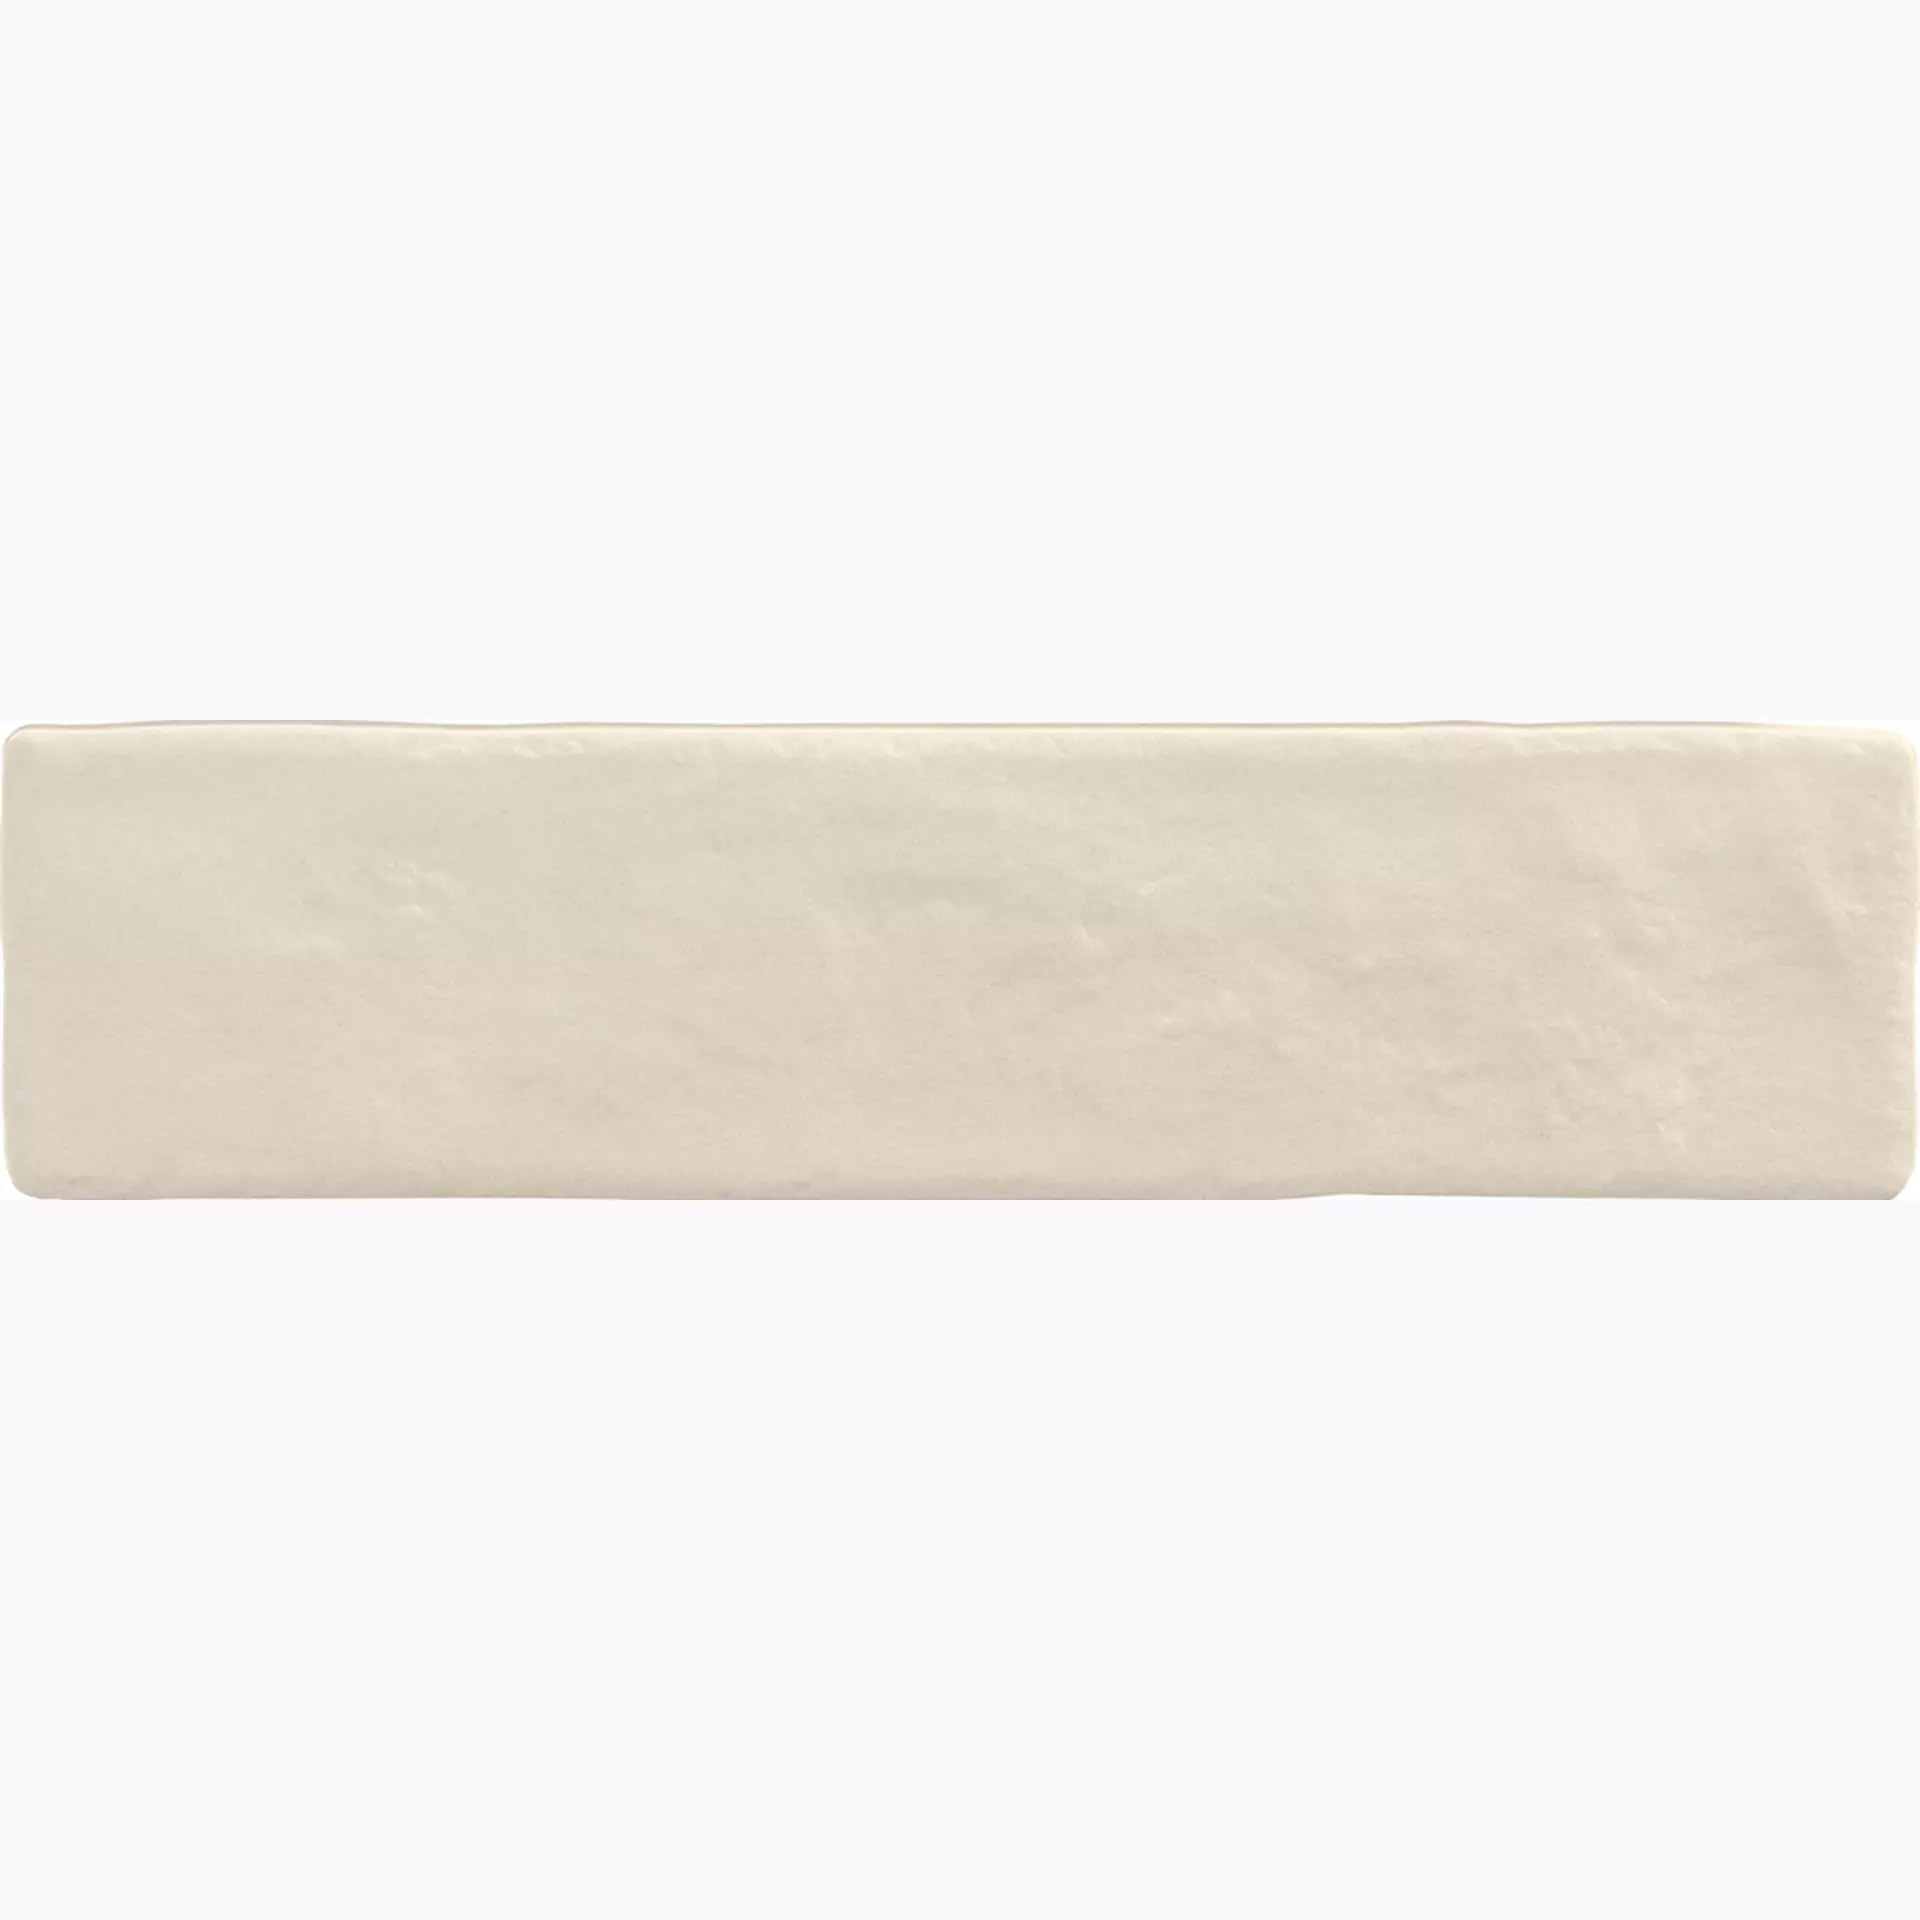 Ragno Calce Panna Naturale – Matt R02R 7x28cm 9mm